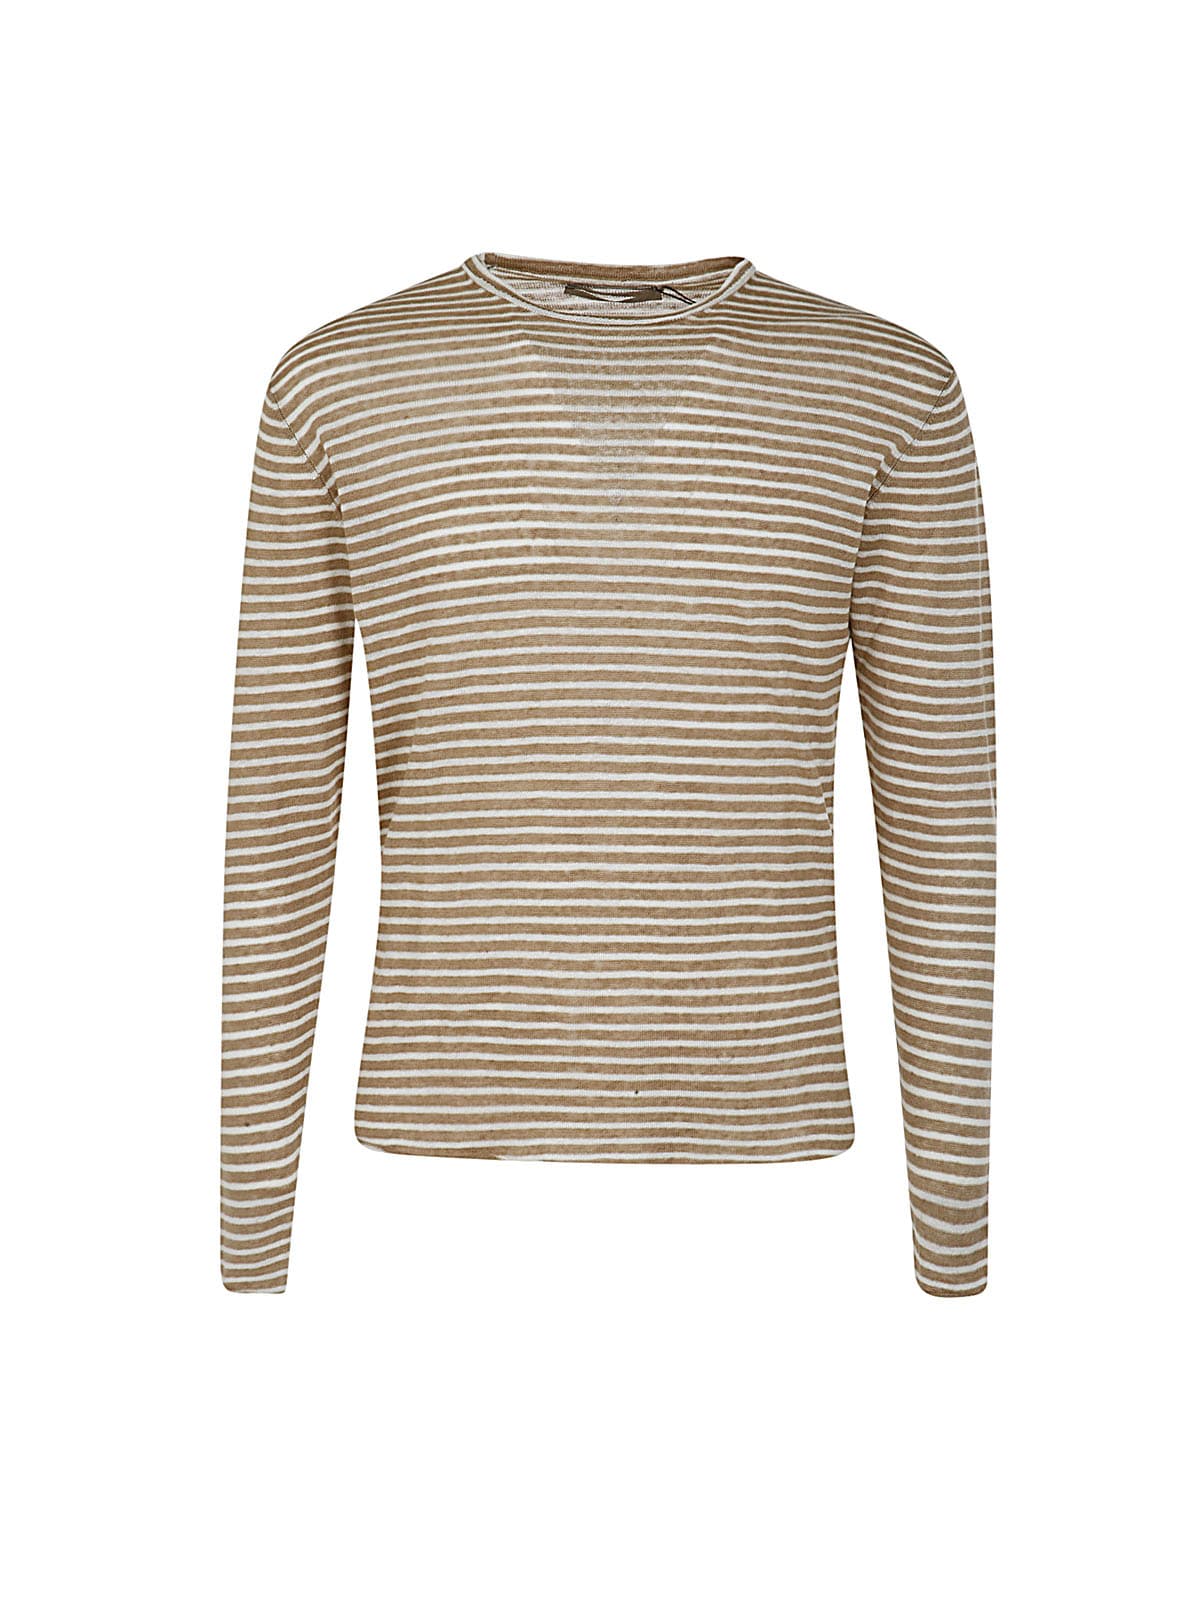 Original Vintage Style Crew Neck L/s Striped Sweater